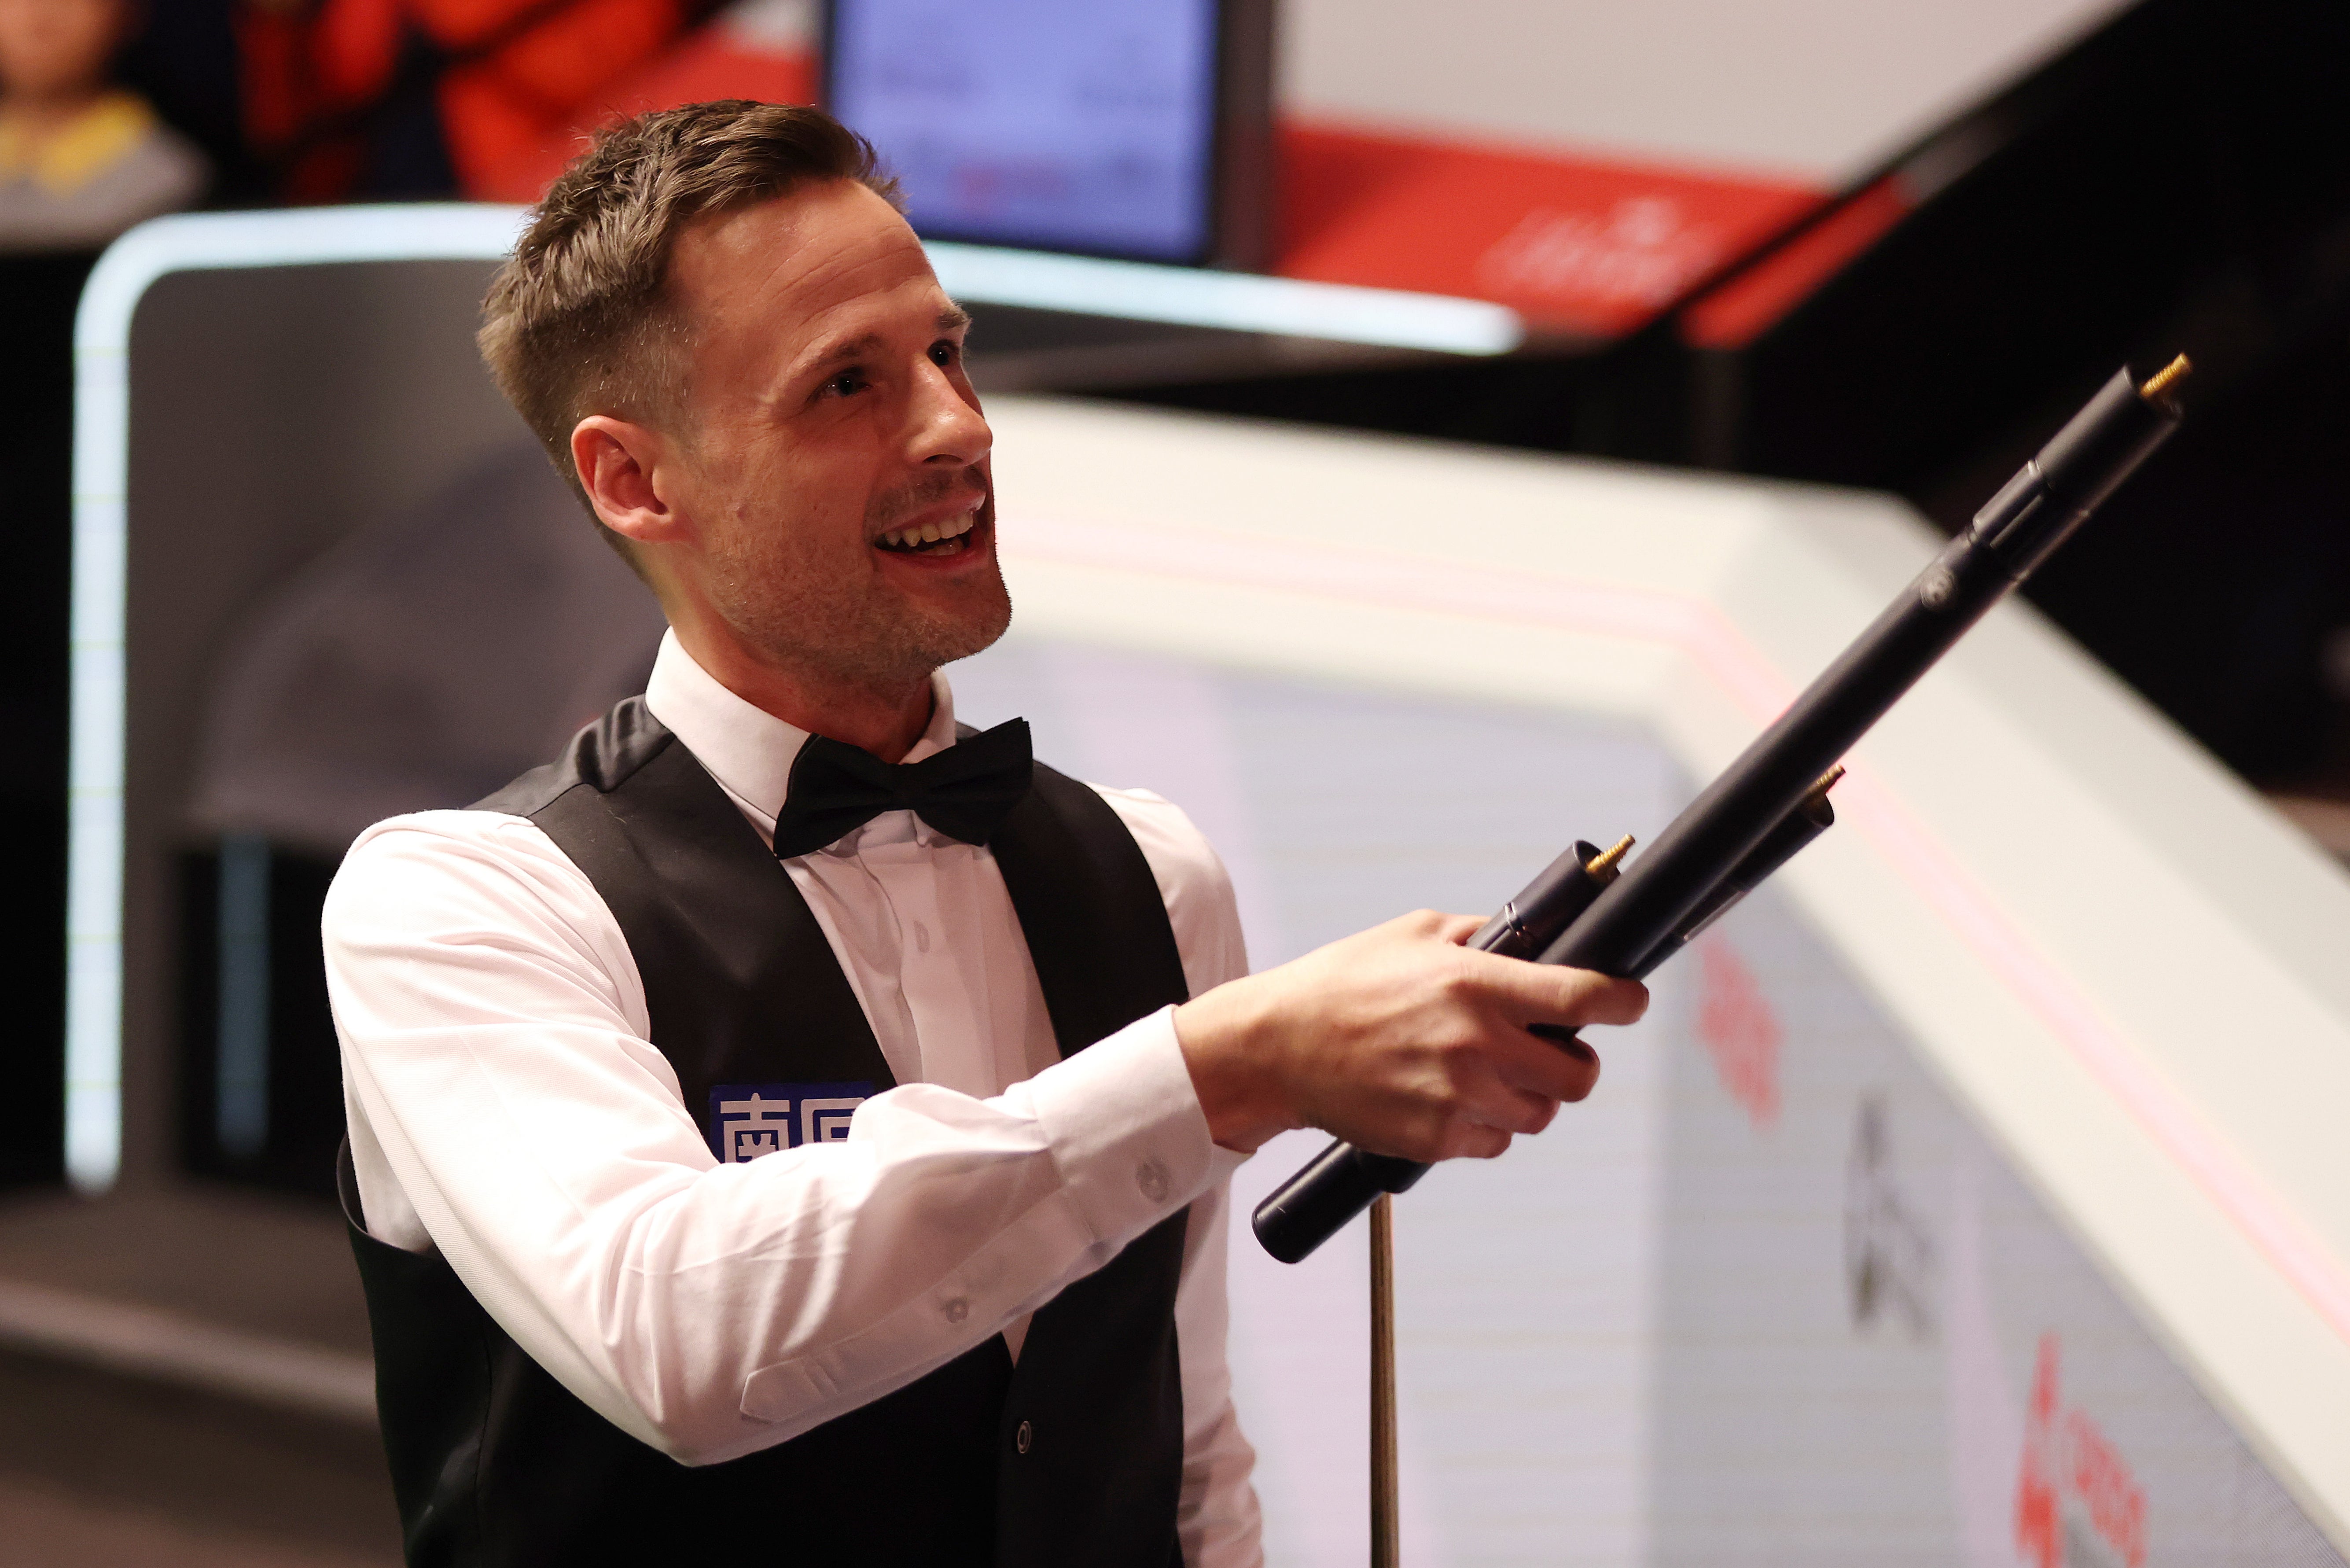 David Gilbert faces Kyren Wilson in the World Snooker Championship semi-finals